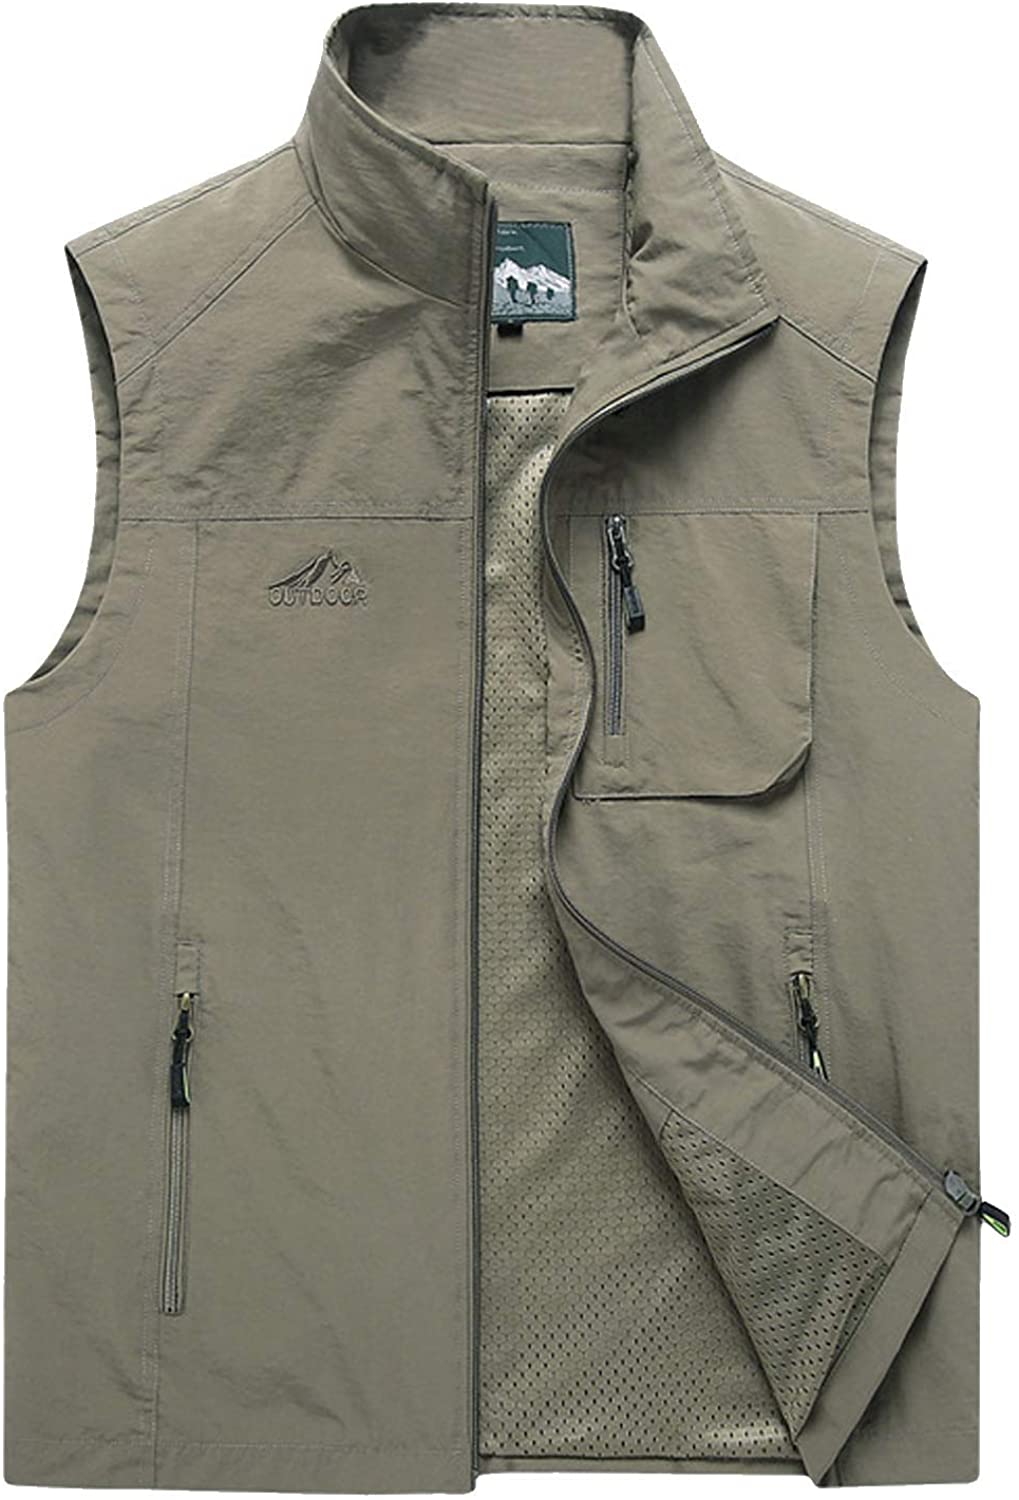 Flygo Men's Casual Outdoor Lightweight Quick Dry Travel Safari Fishing Vest 